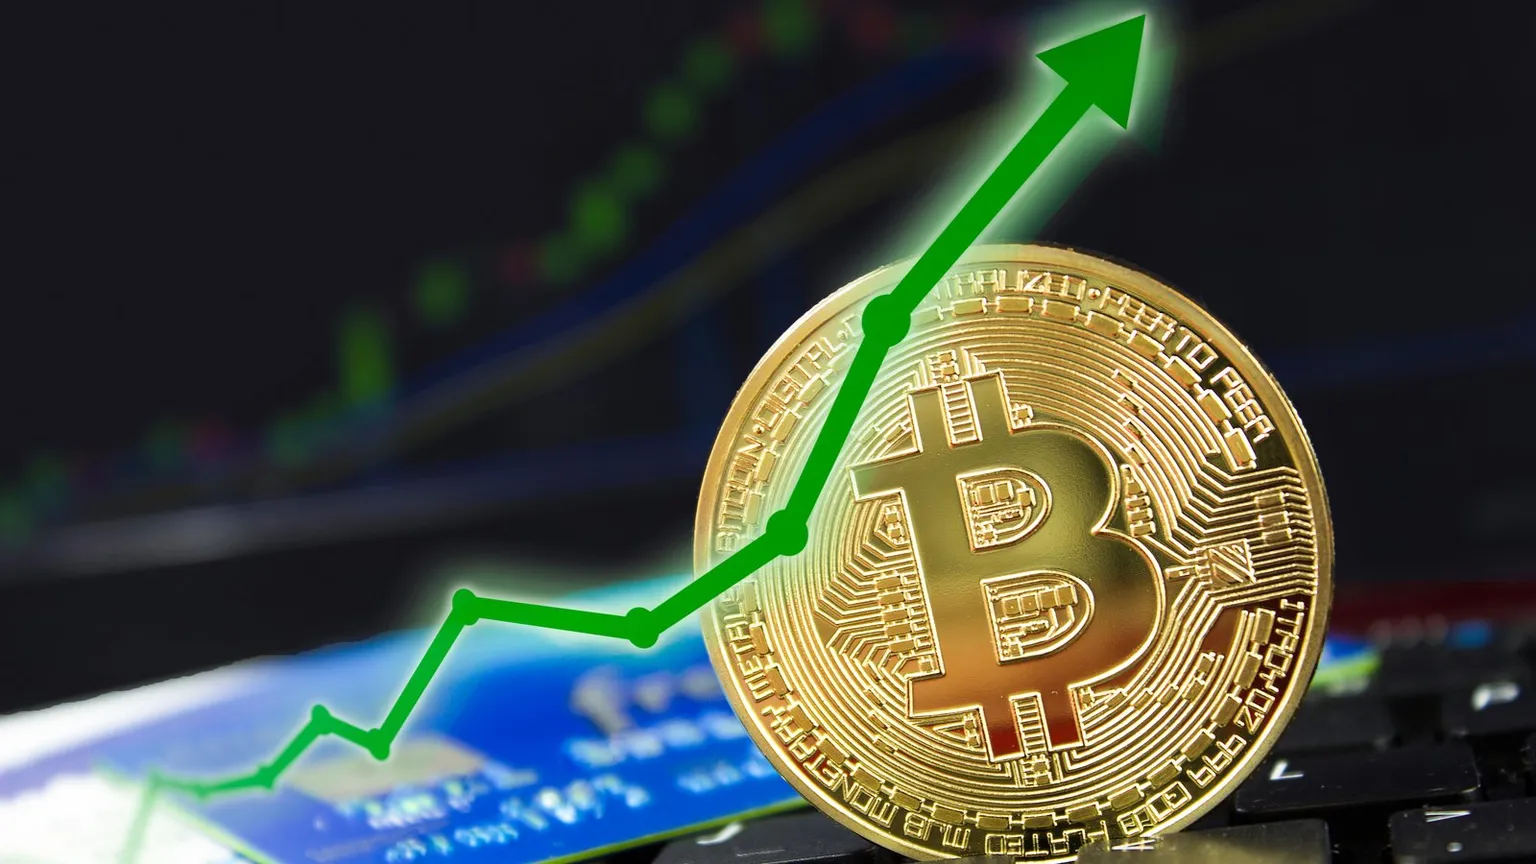 A gold Bitcoin next to a chart showing upwards market movement